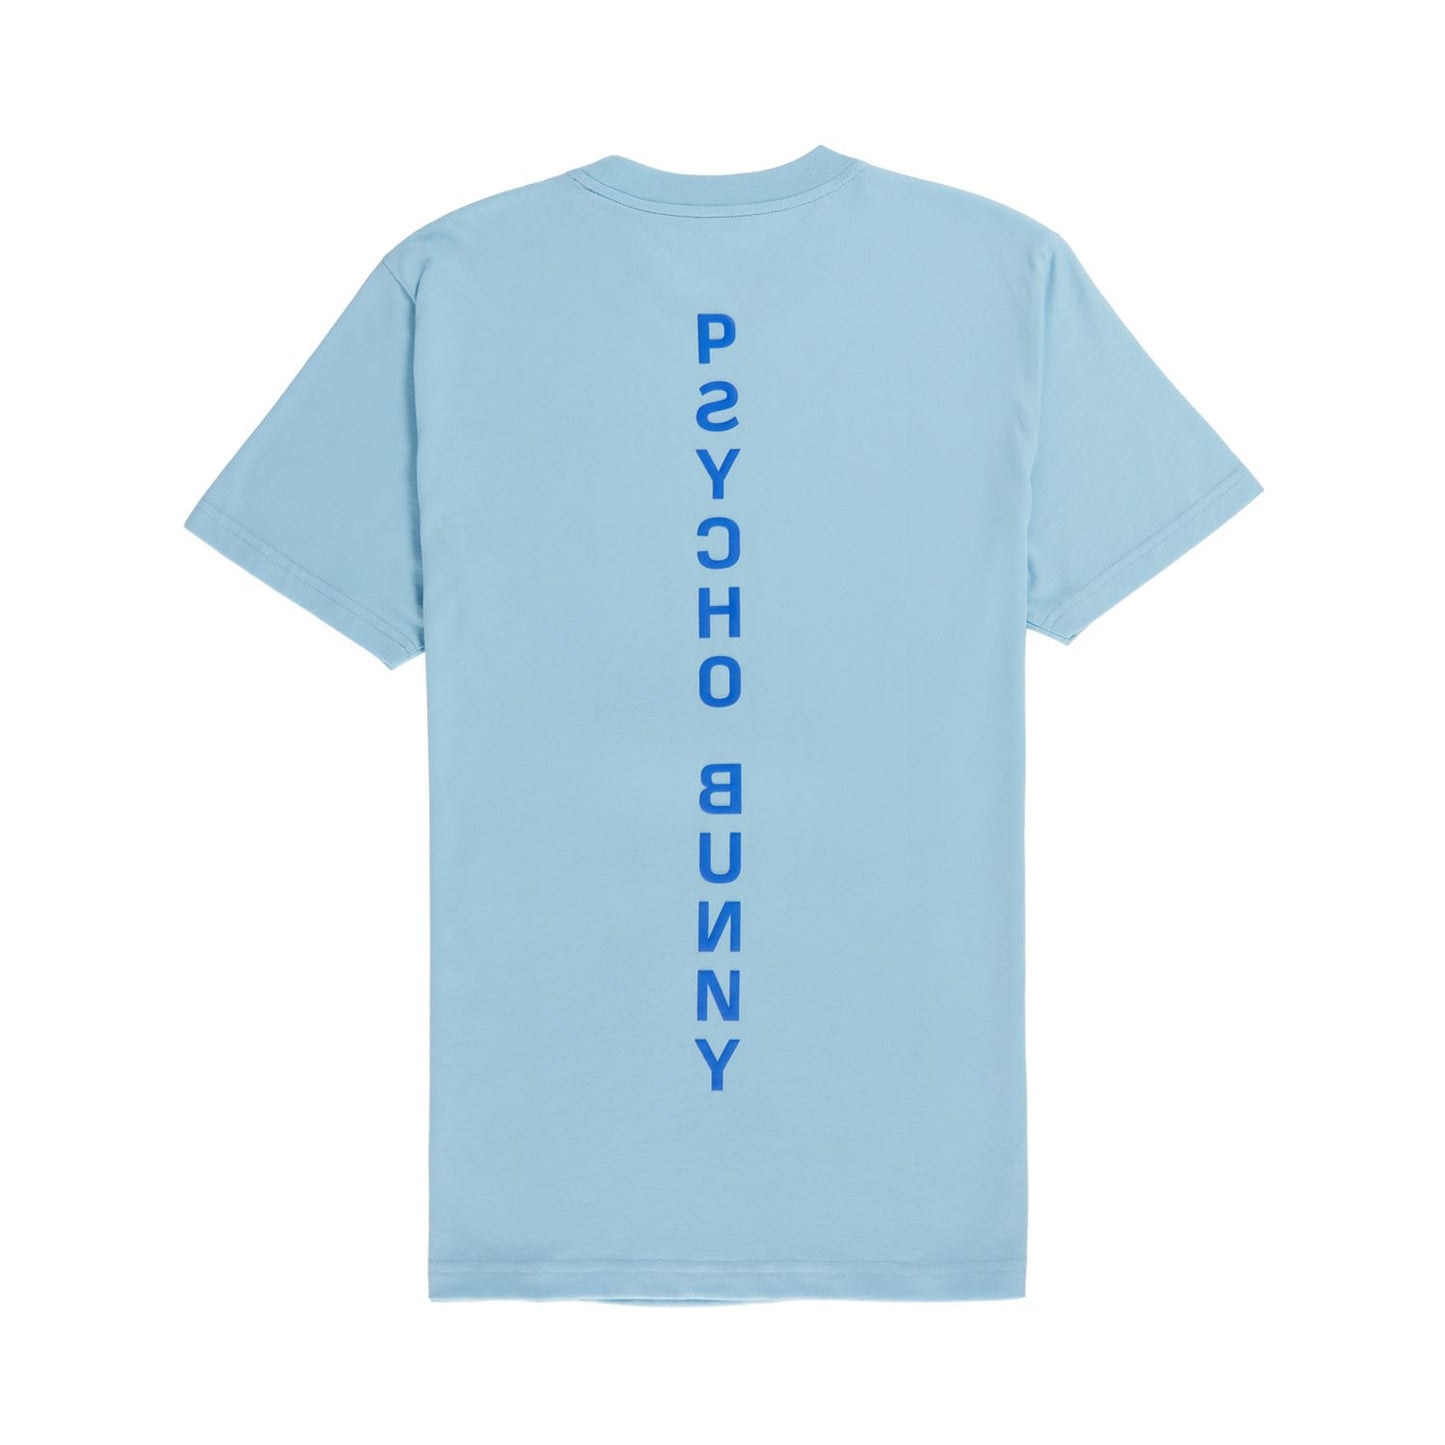 Psycho Bunny Mens Lloyds Graphic Tee - Sky Blue